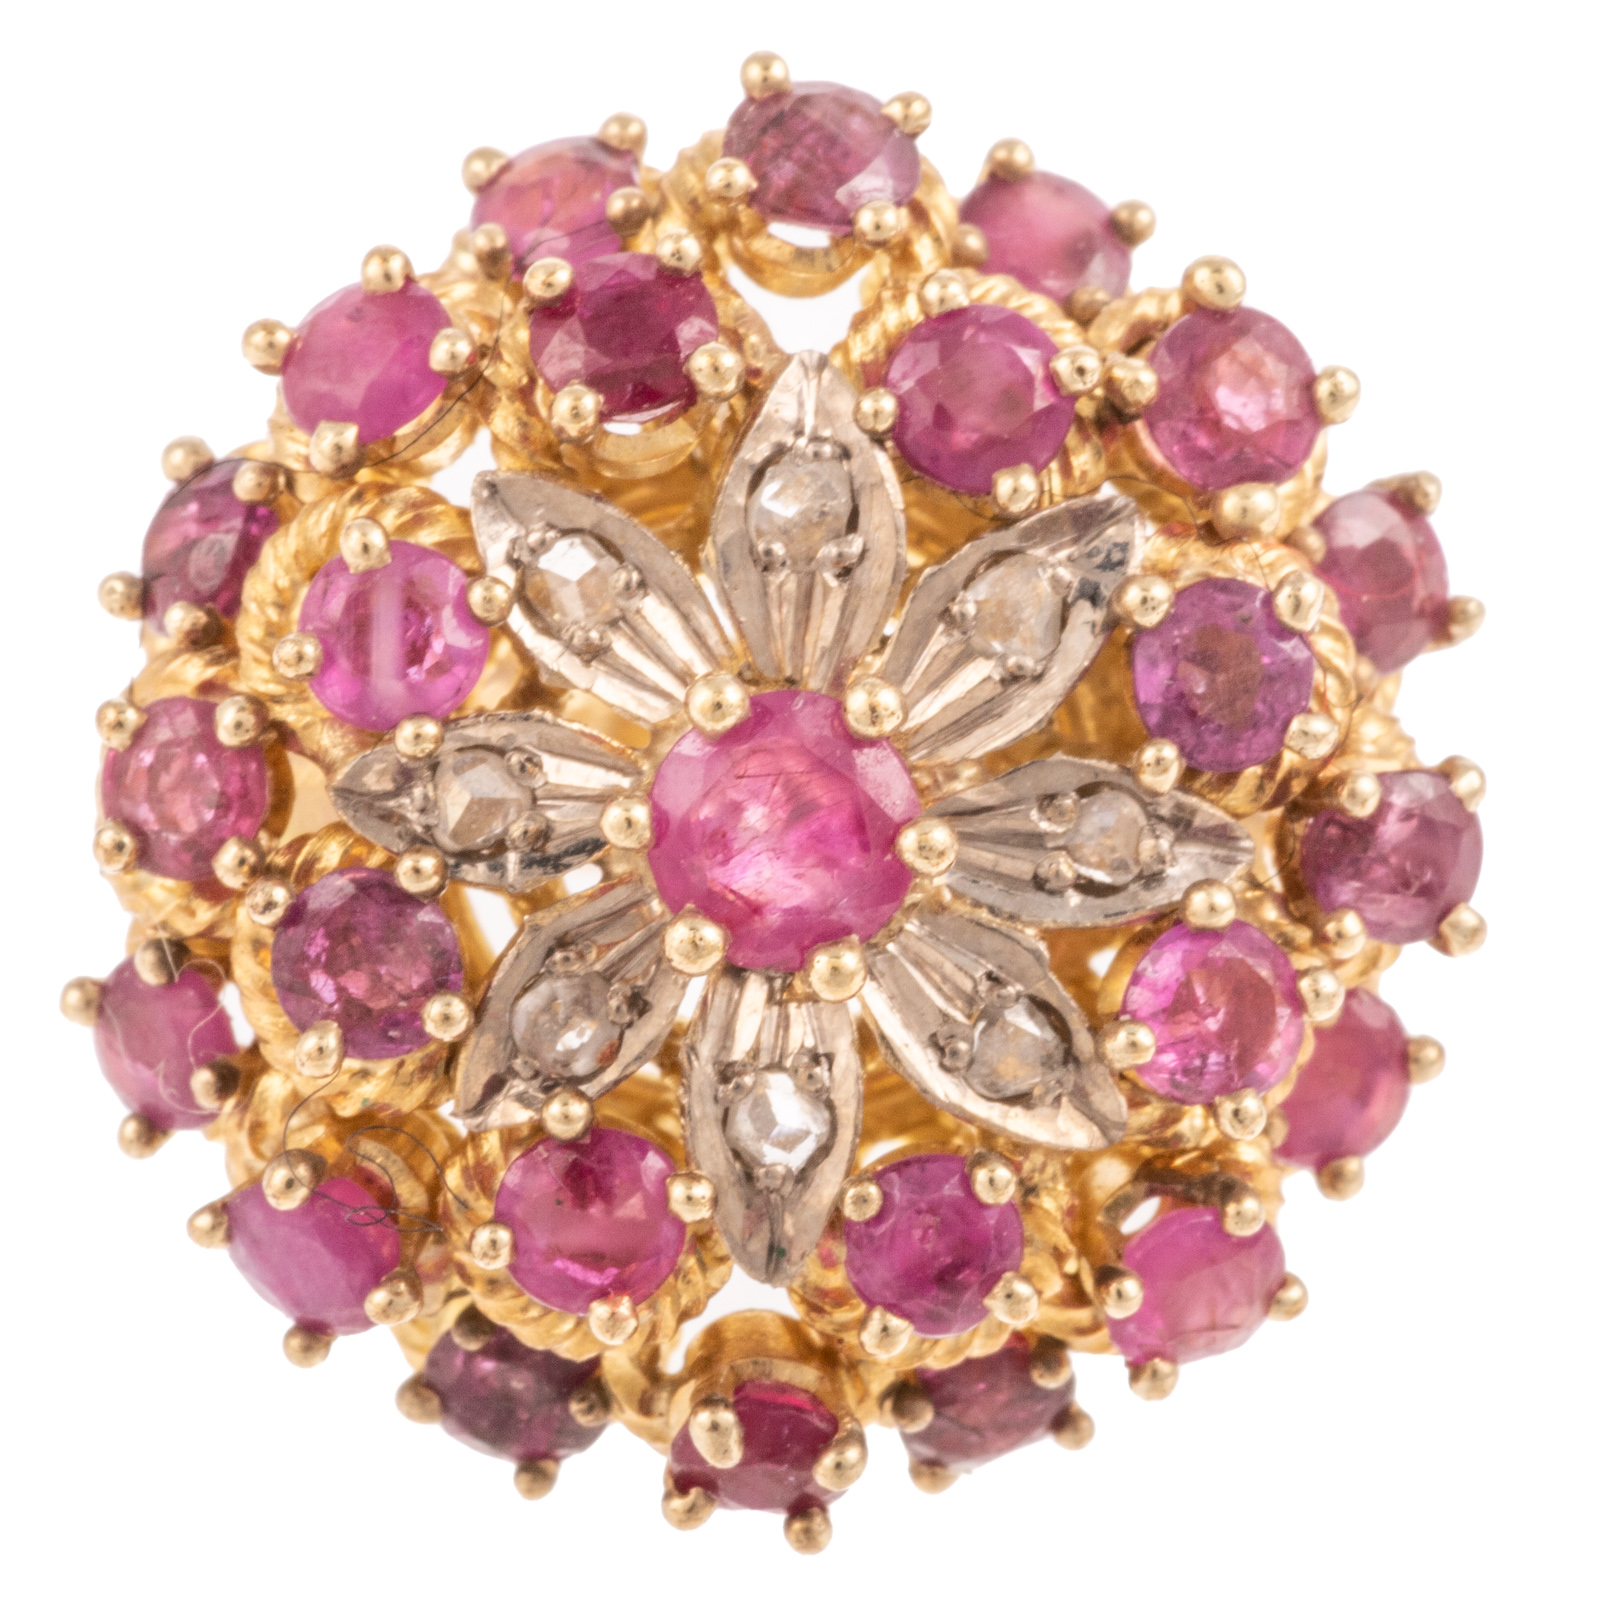 A RUBY DIAMOND FLOWER RING IN 369560